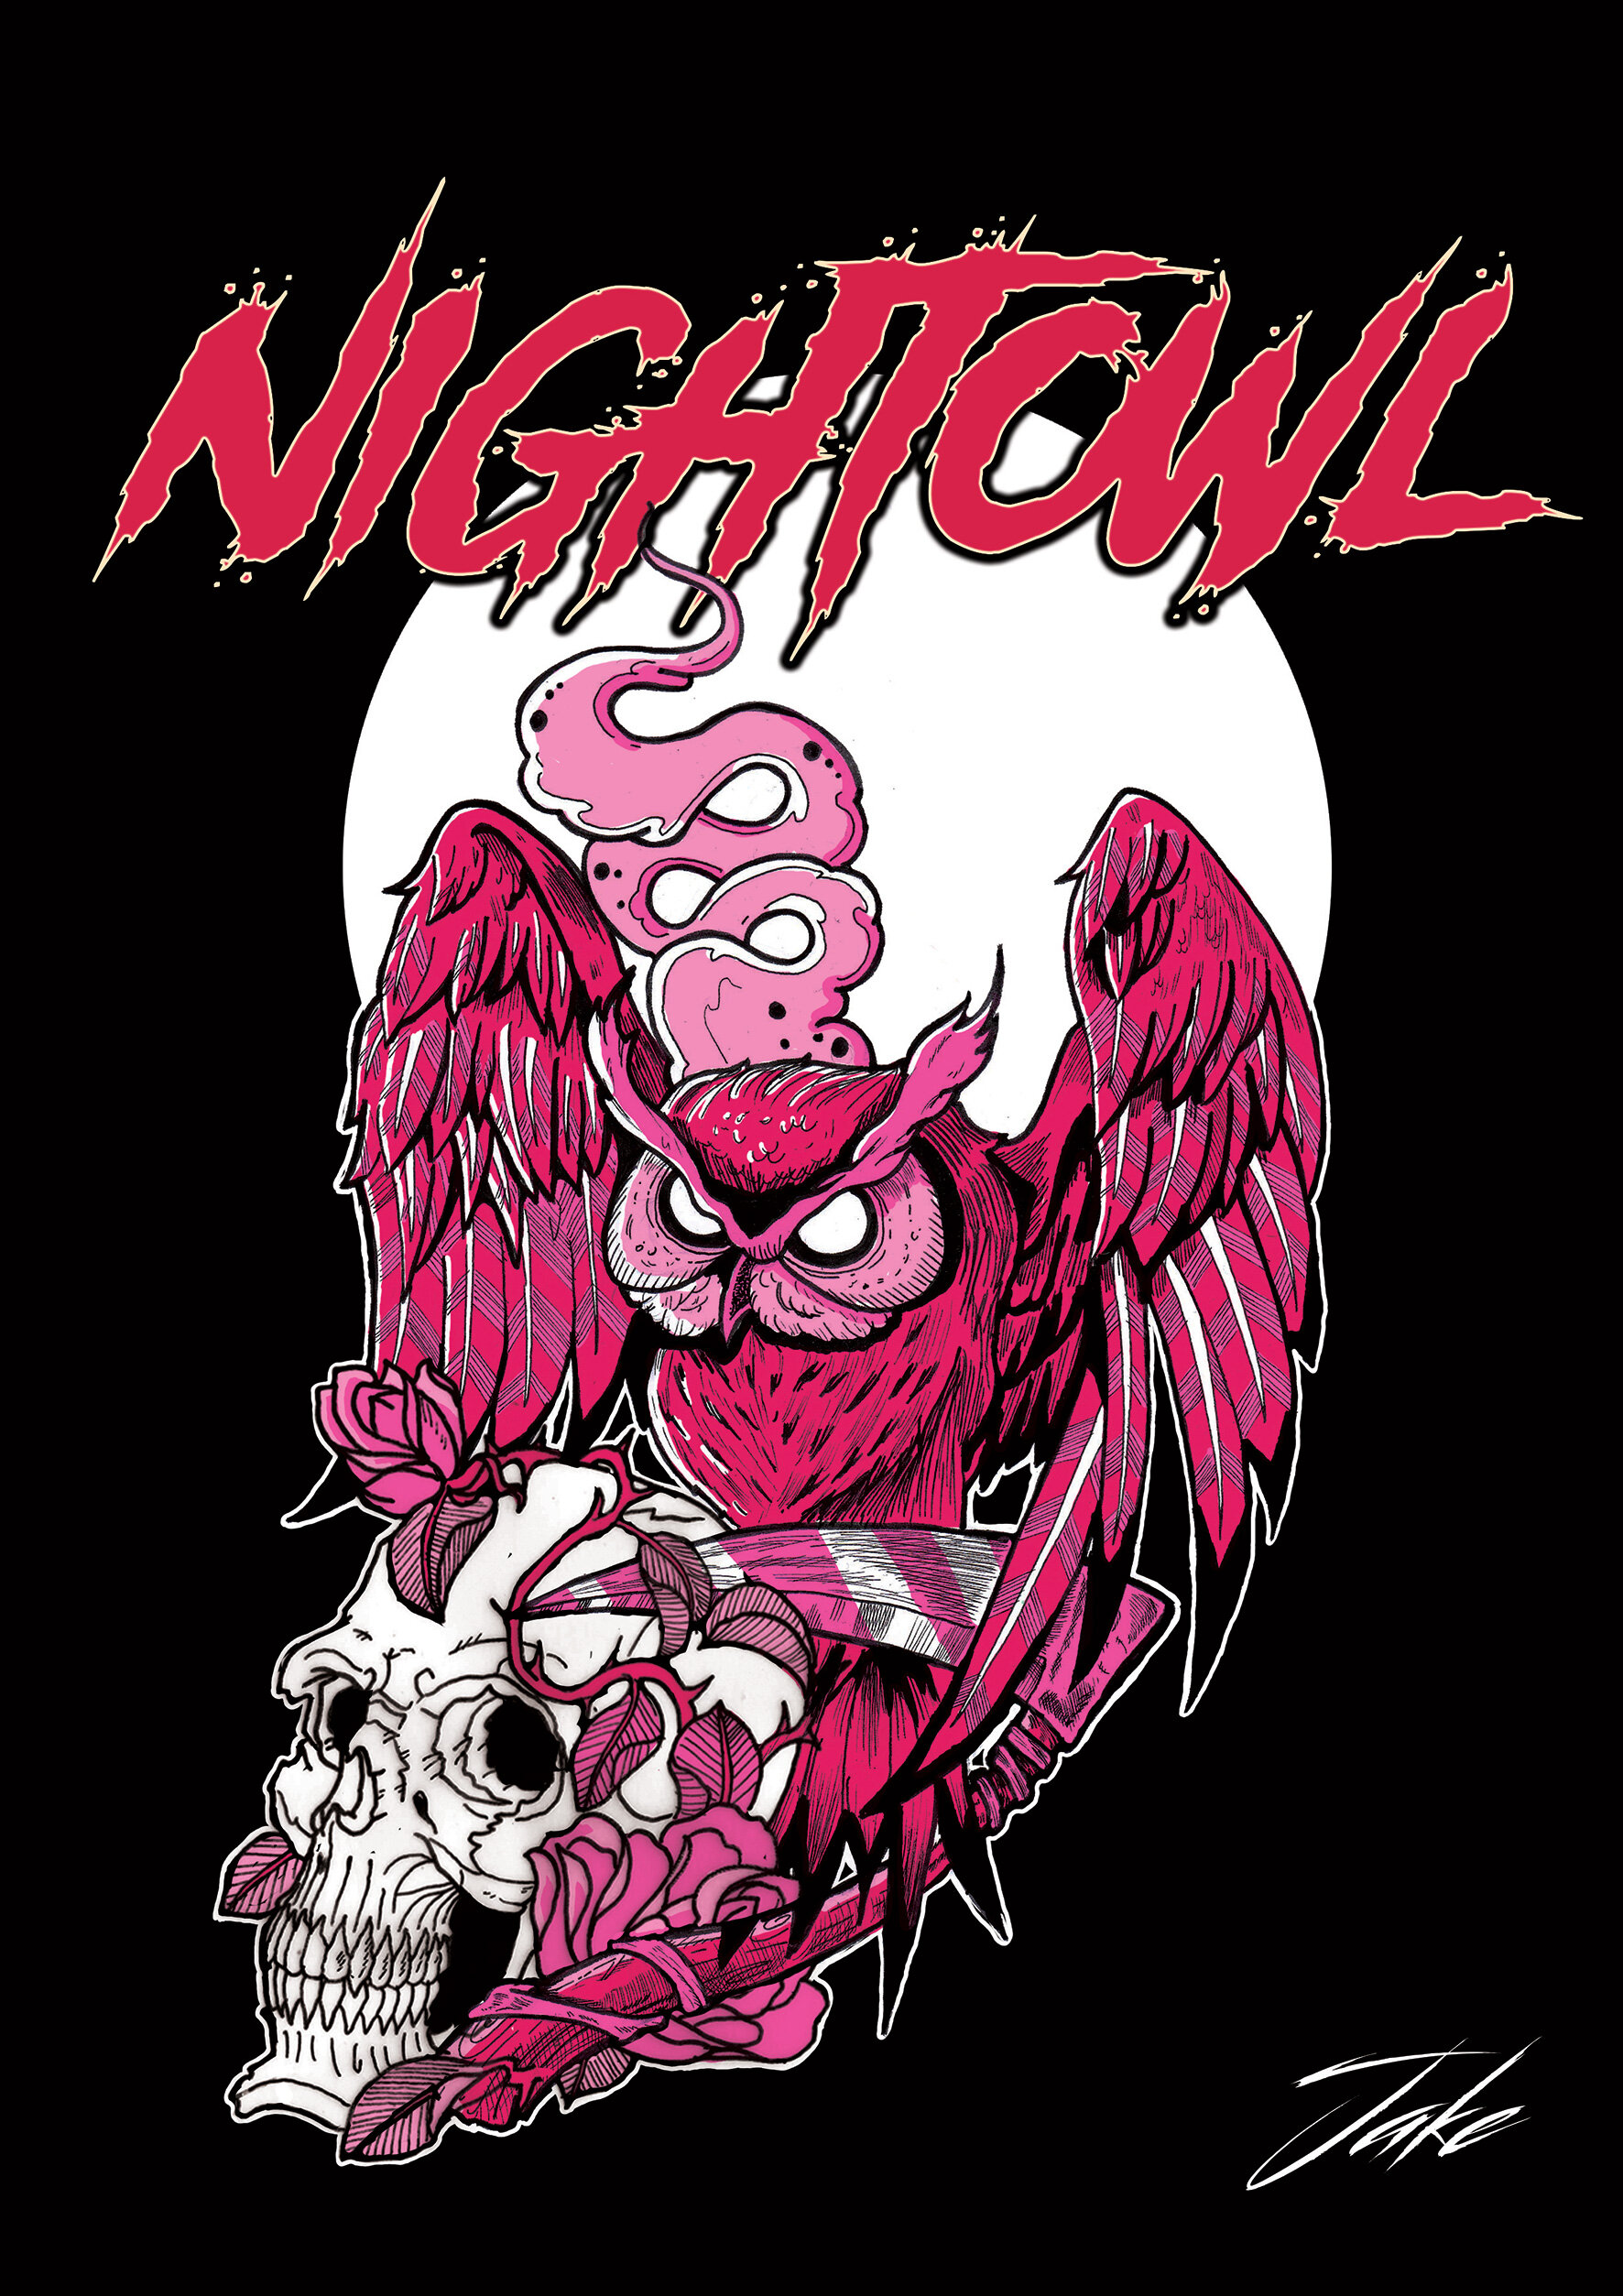 Nightowl-2018.jpg